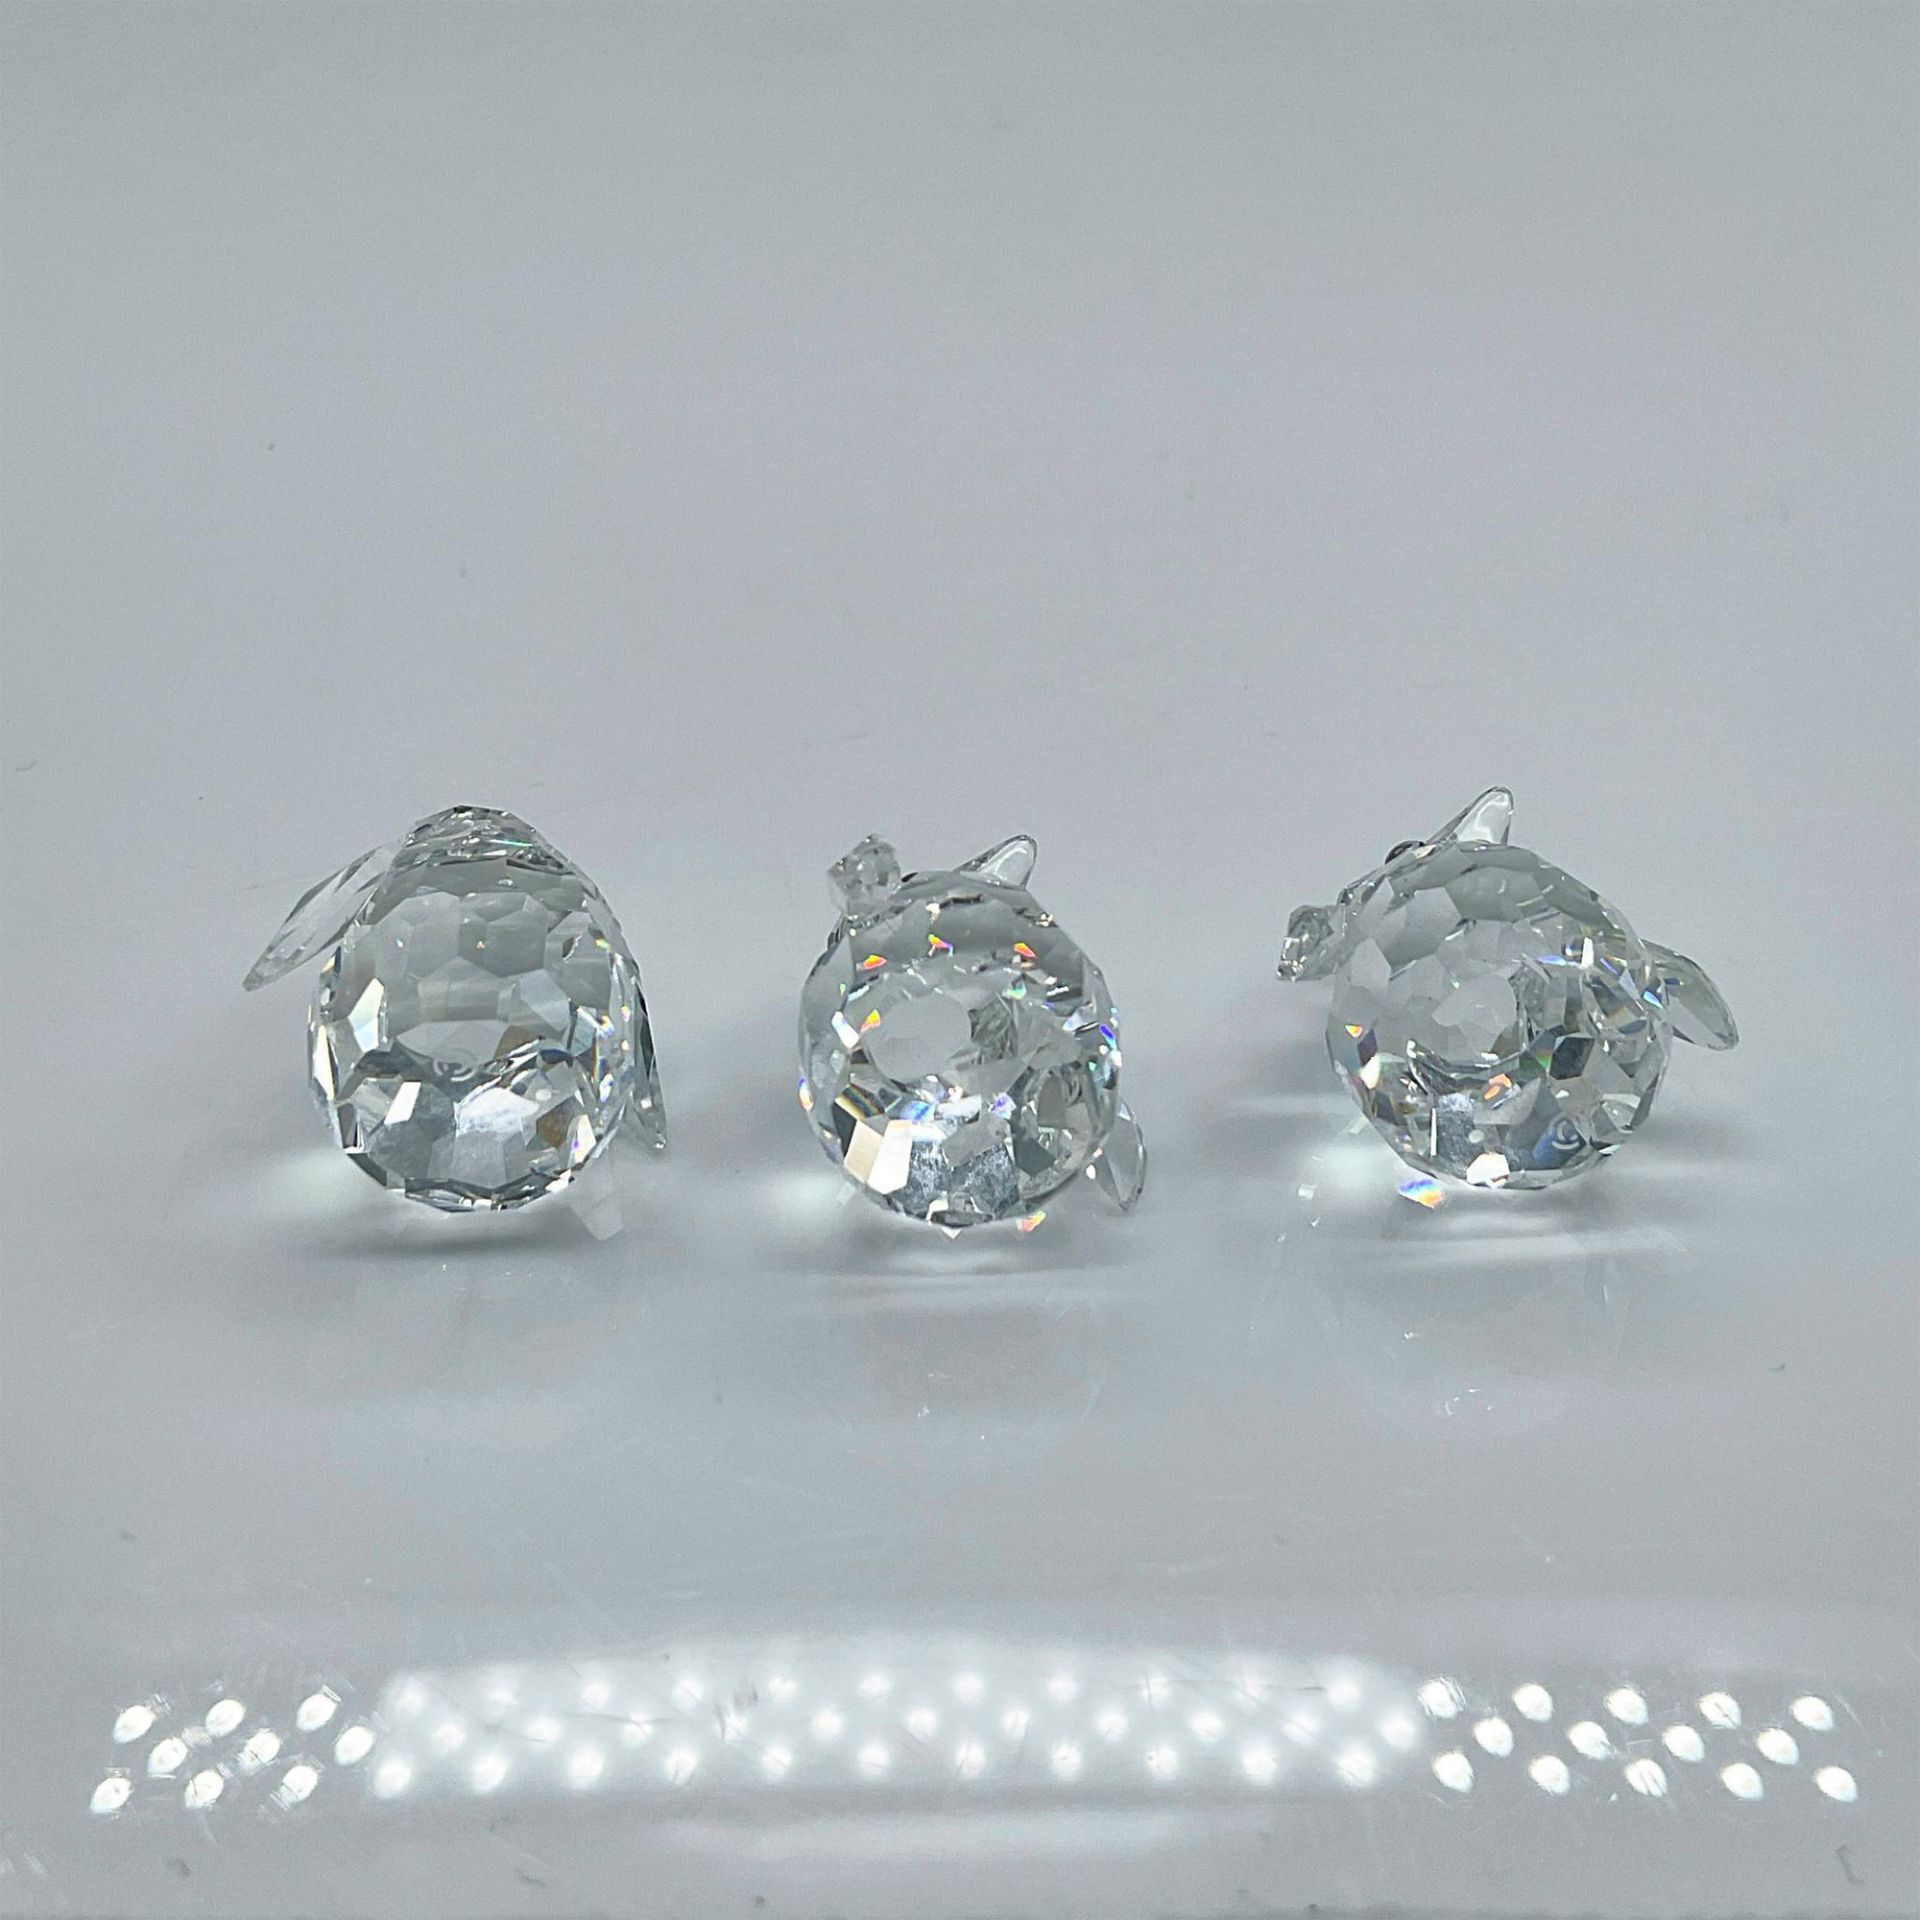 Swarovski Silver Crystal Figurines, Baby Penguins - Image 3 of 4